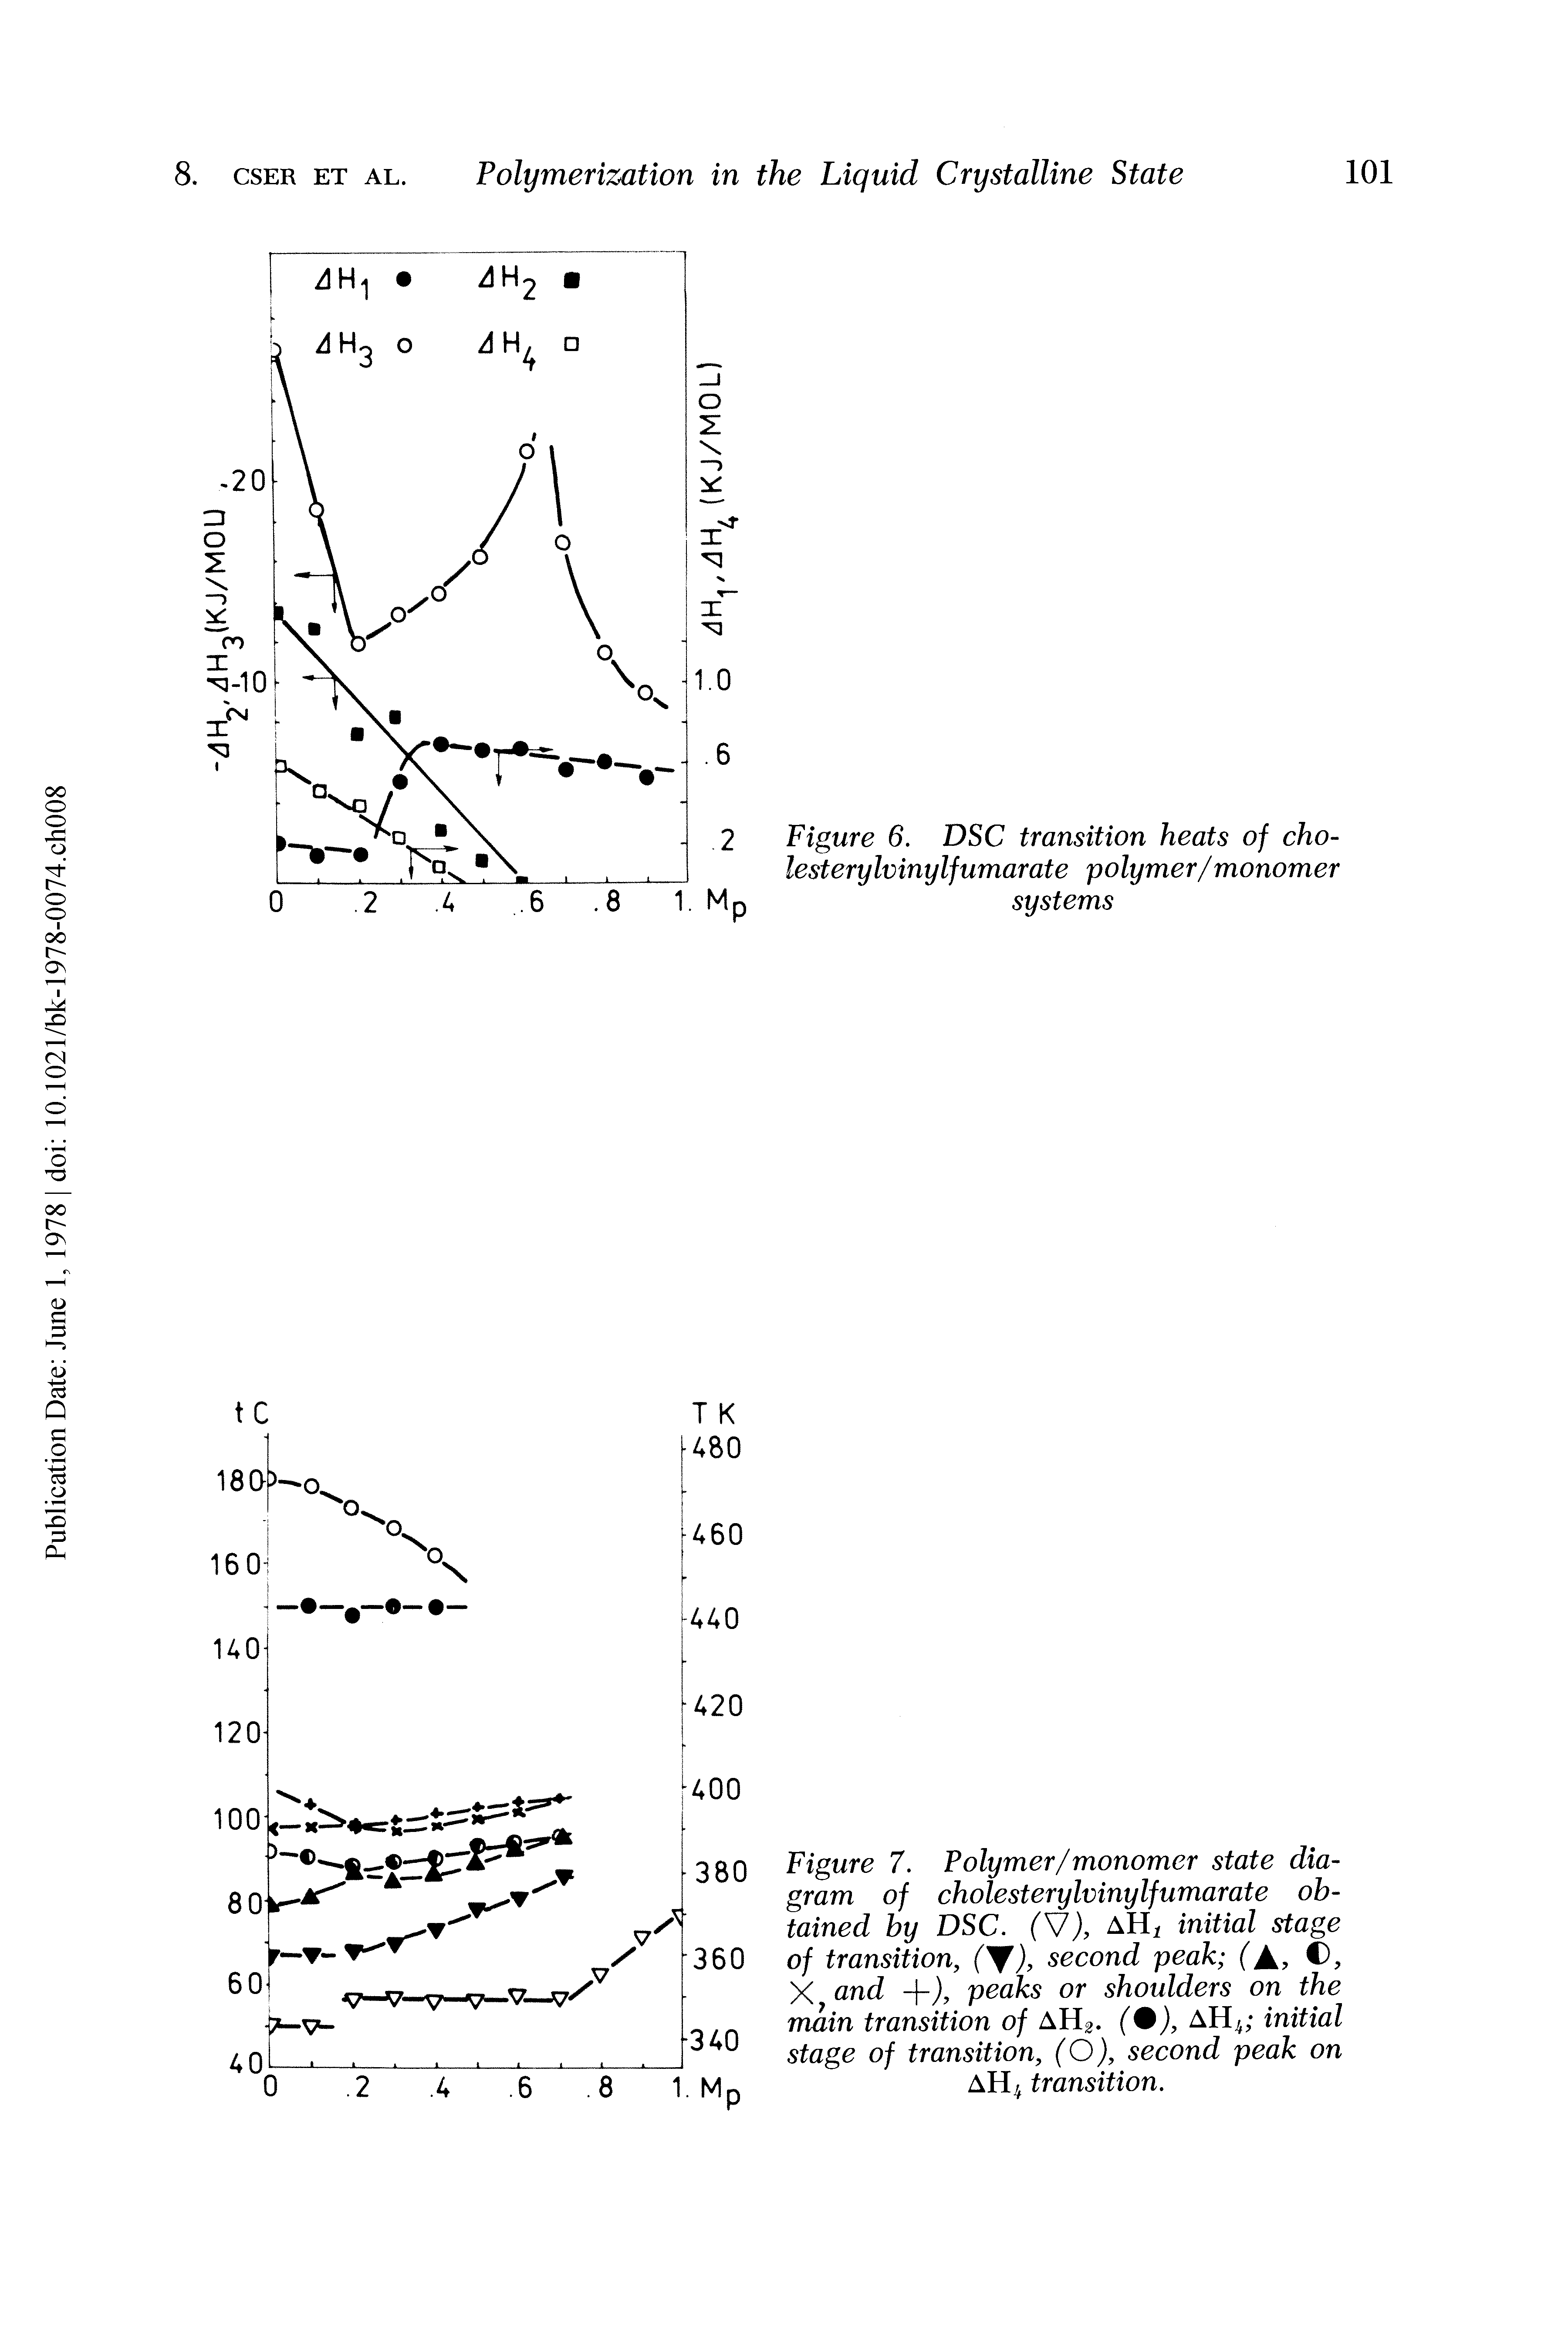 Figure 6. DSC transition heats of cho-lesterylvinylfumarate polymer/monomer systems...